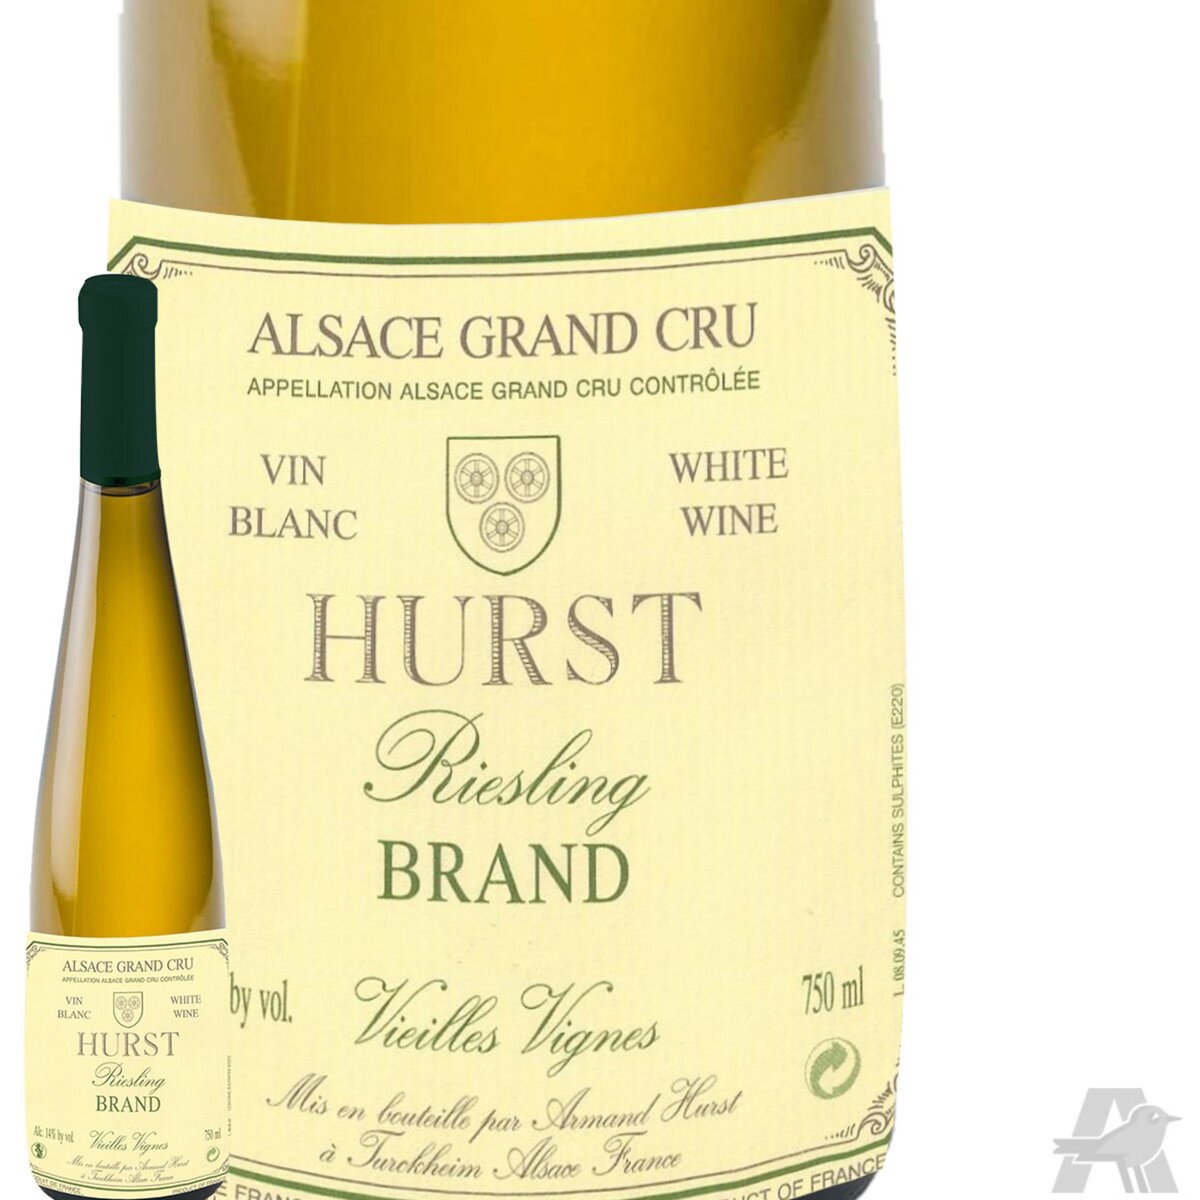 Domaine Hurst Alsace Riesling Grand Cru Brand Vieilles Vignes Blanc 2010